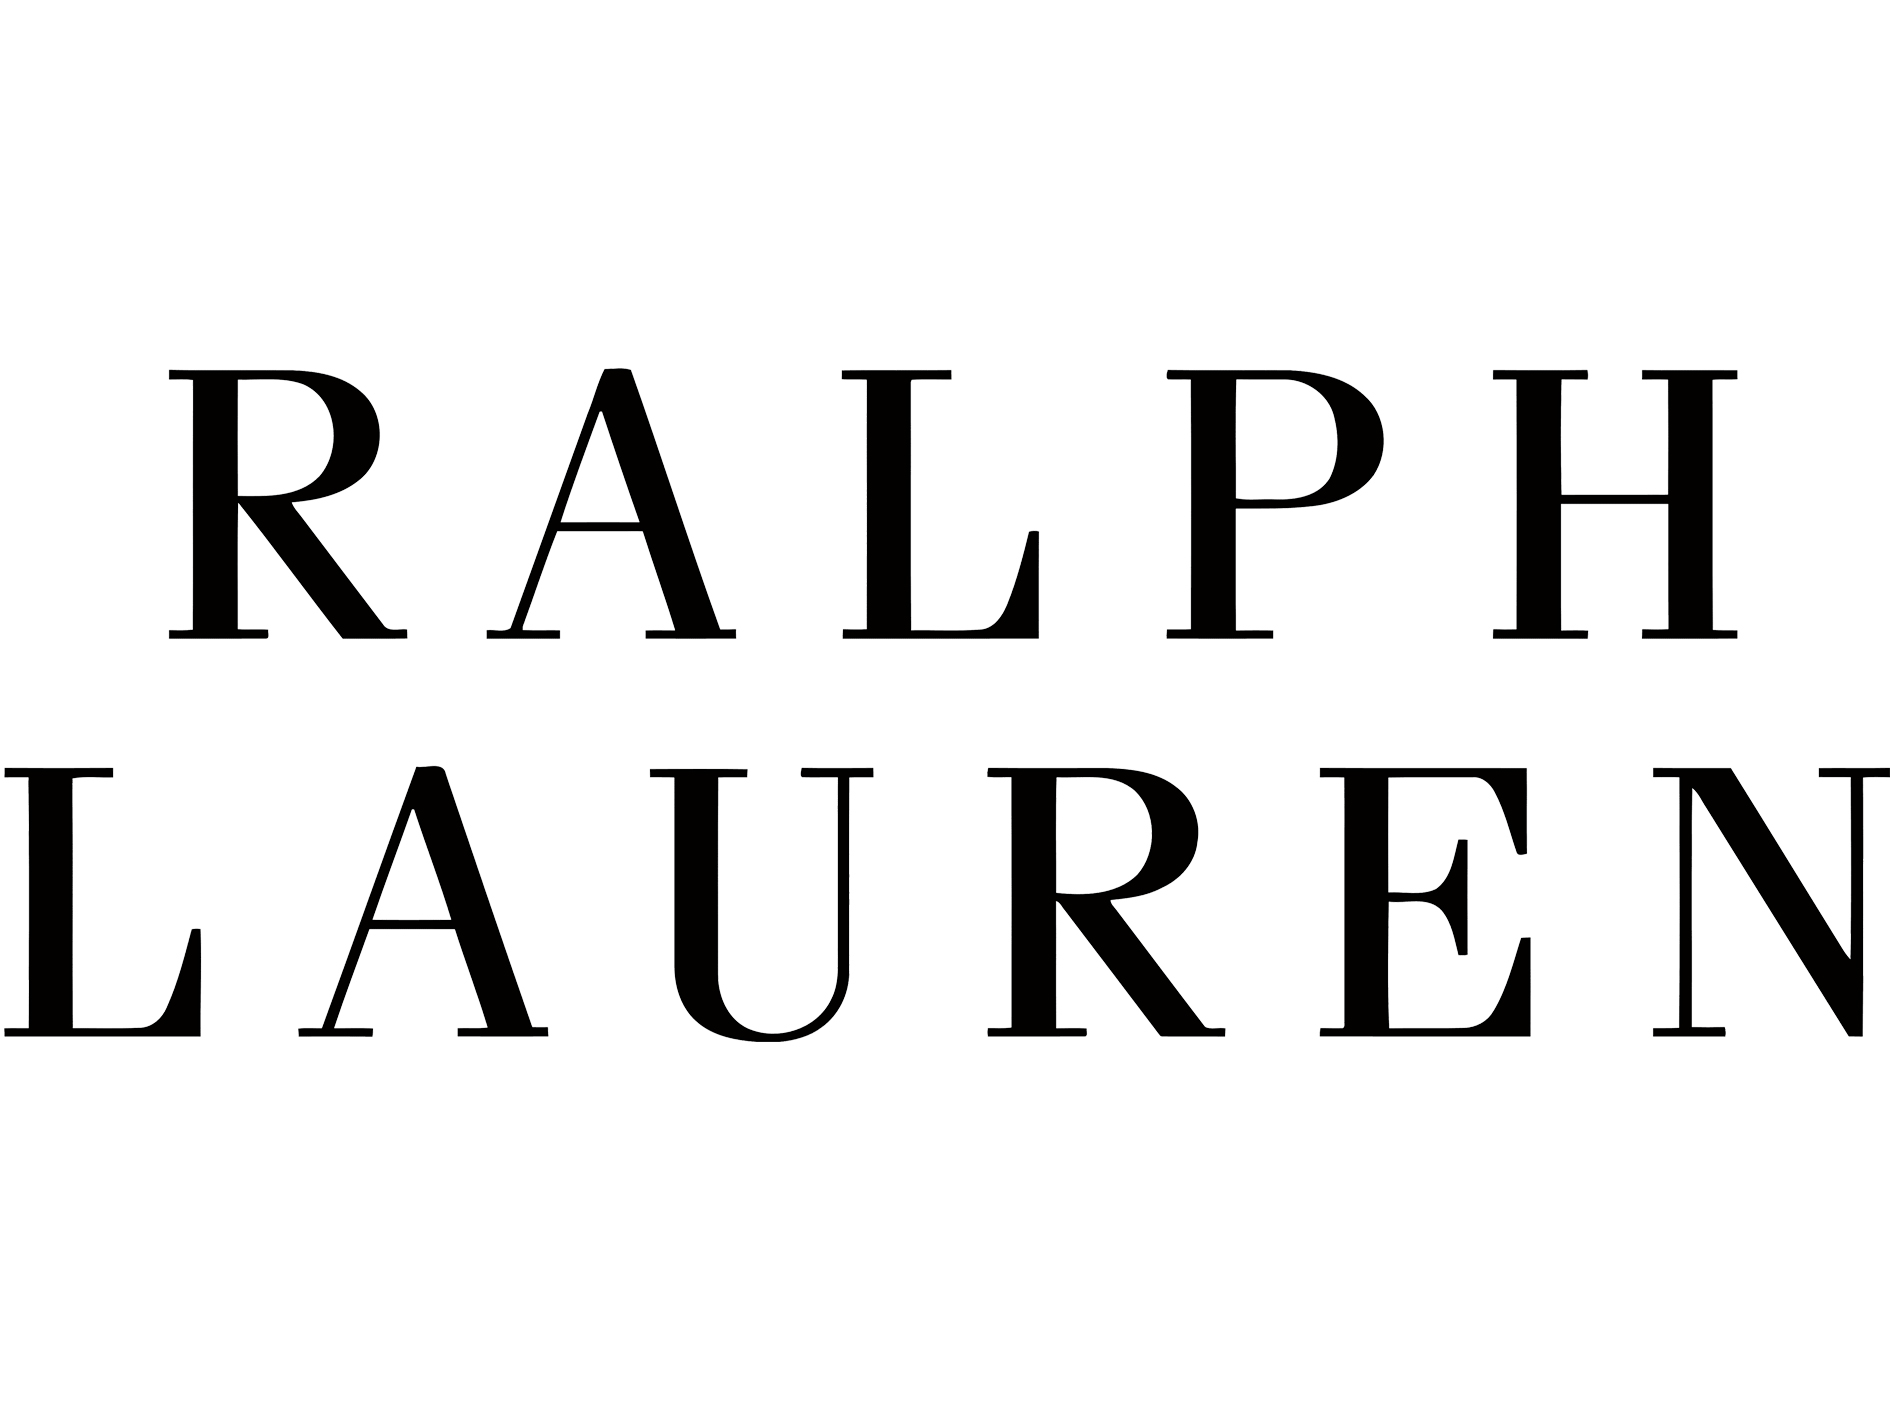 Ralph Lauren and katharine pooley interor design luxury united kingdom united states